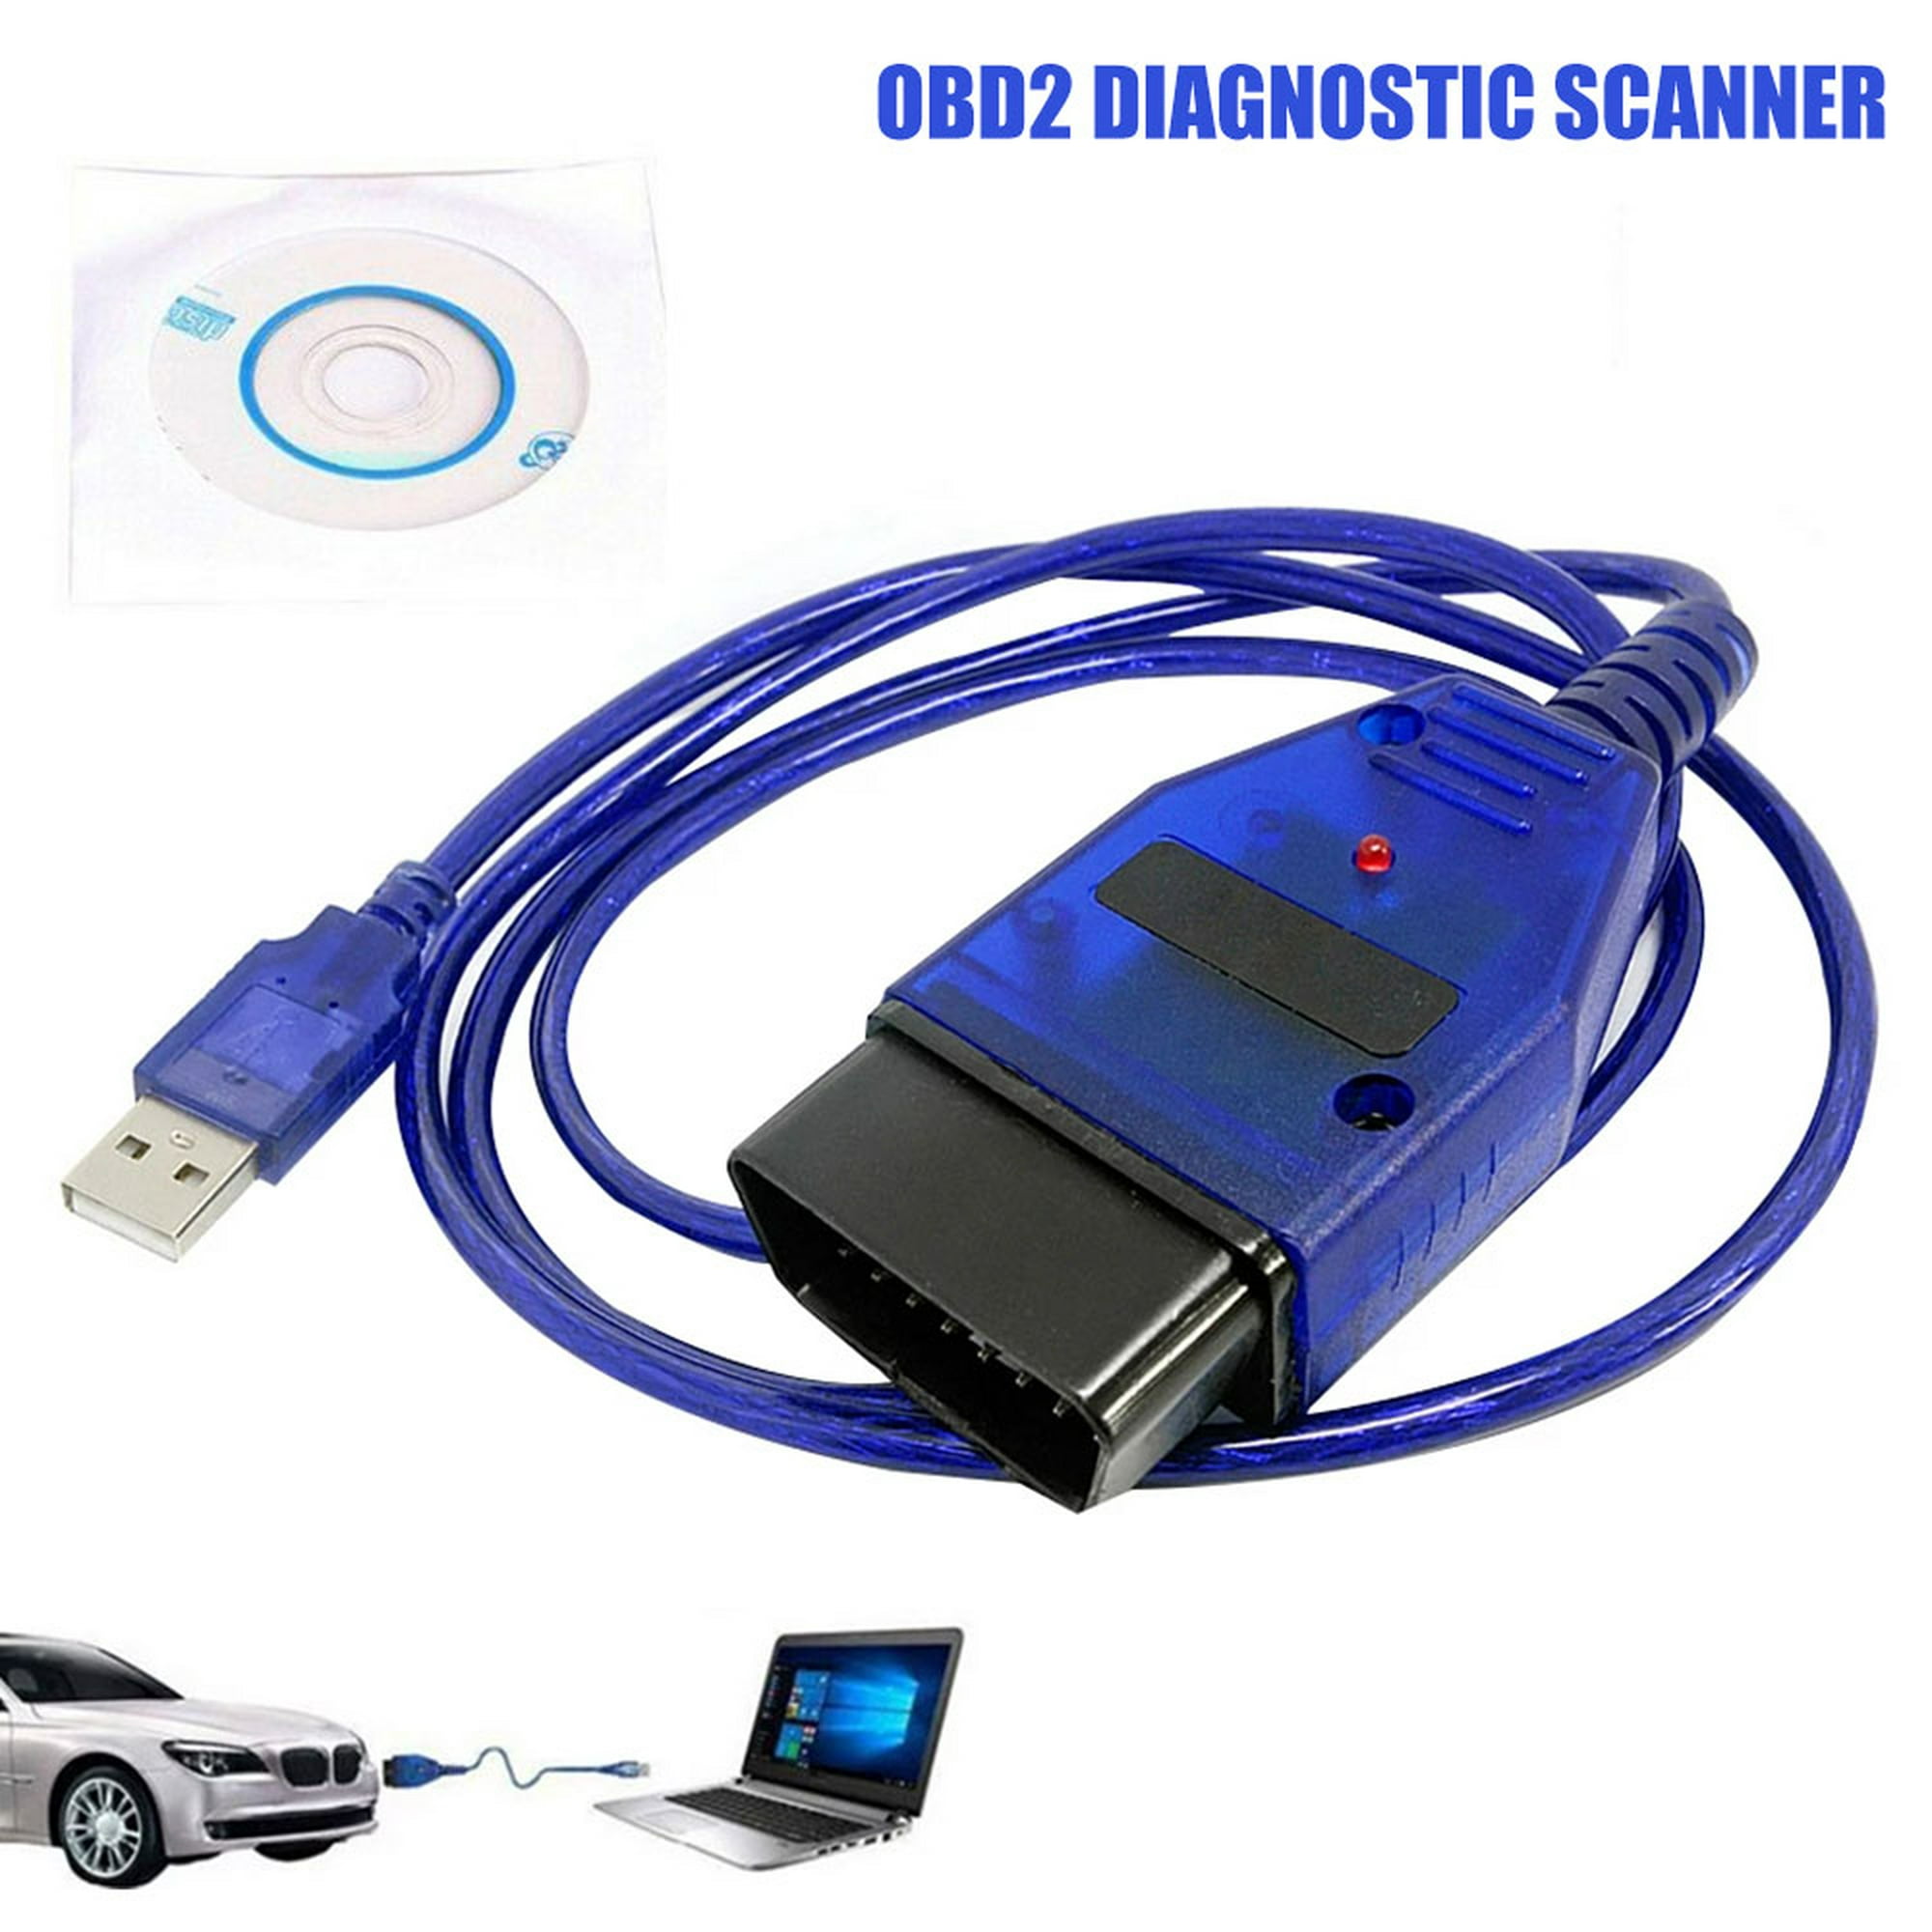 Comprar Autophix VA007 Escáner de Diagnóstico para  Volkswagen/Seat/Audi/Skoda